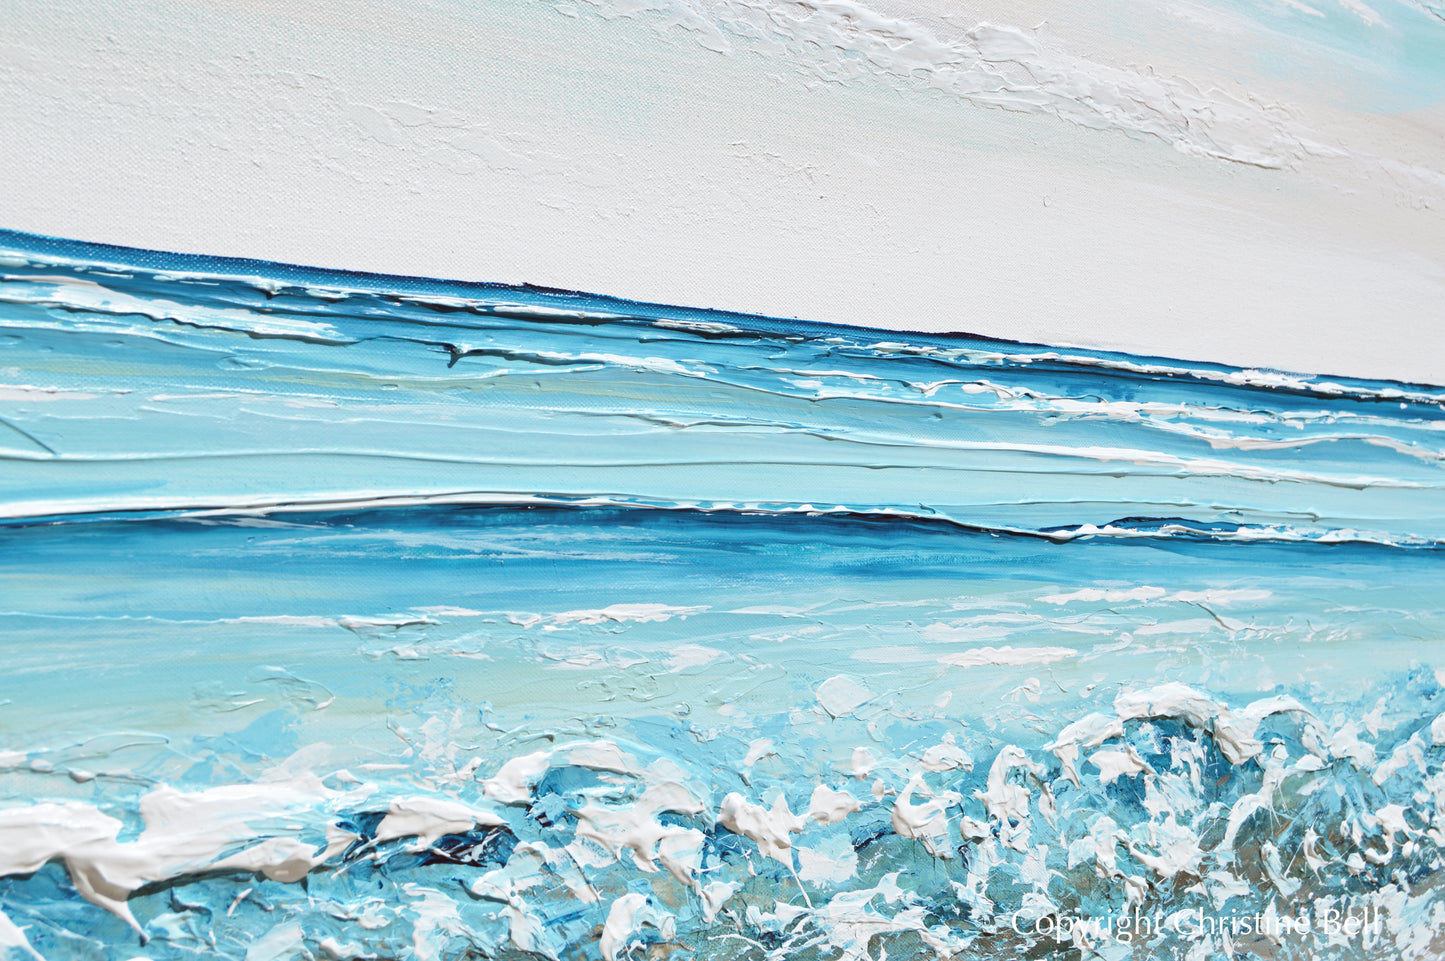 "Seaside Serenity" ORIGINAL Art Coastal Abstract Painting Textured Ocean Waves Blue Beach 48x30"